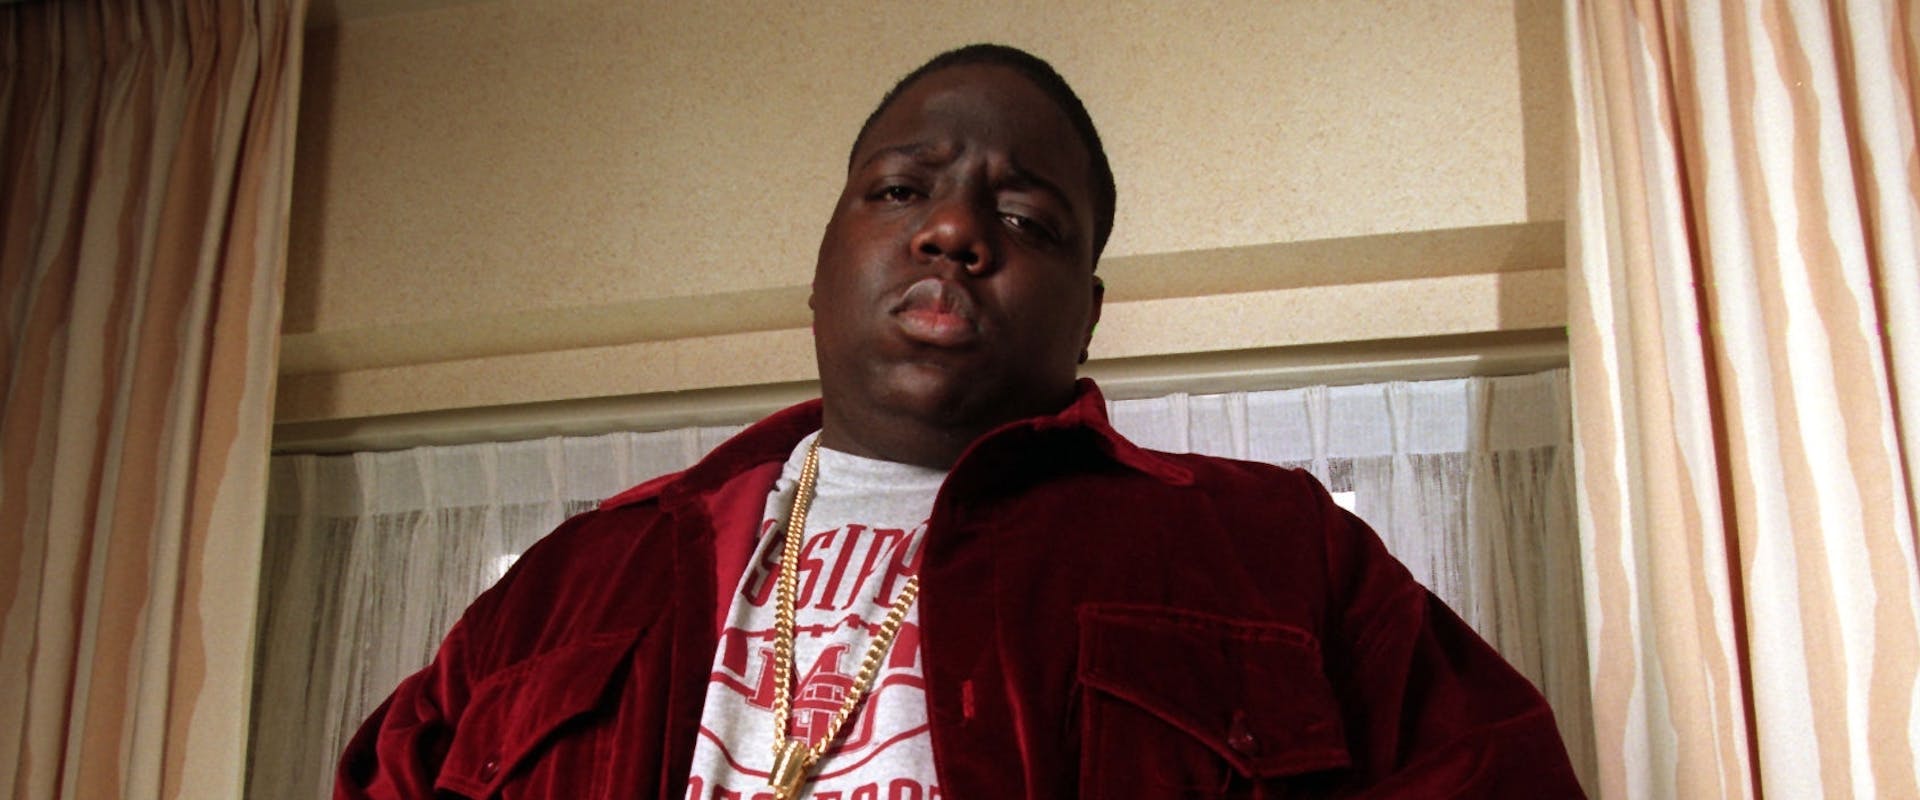 Rapper the Notorious B.I.G., February 25, 1997